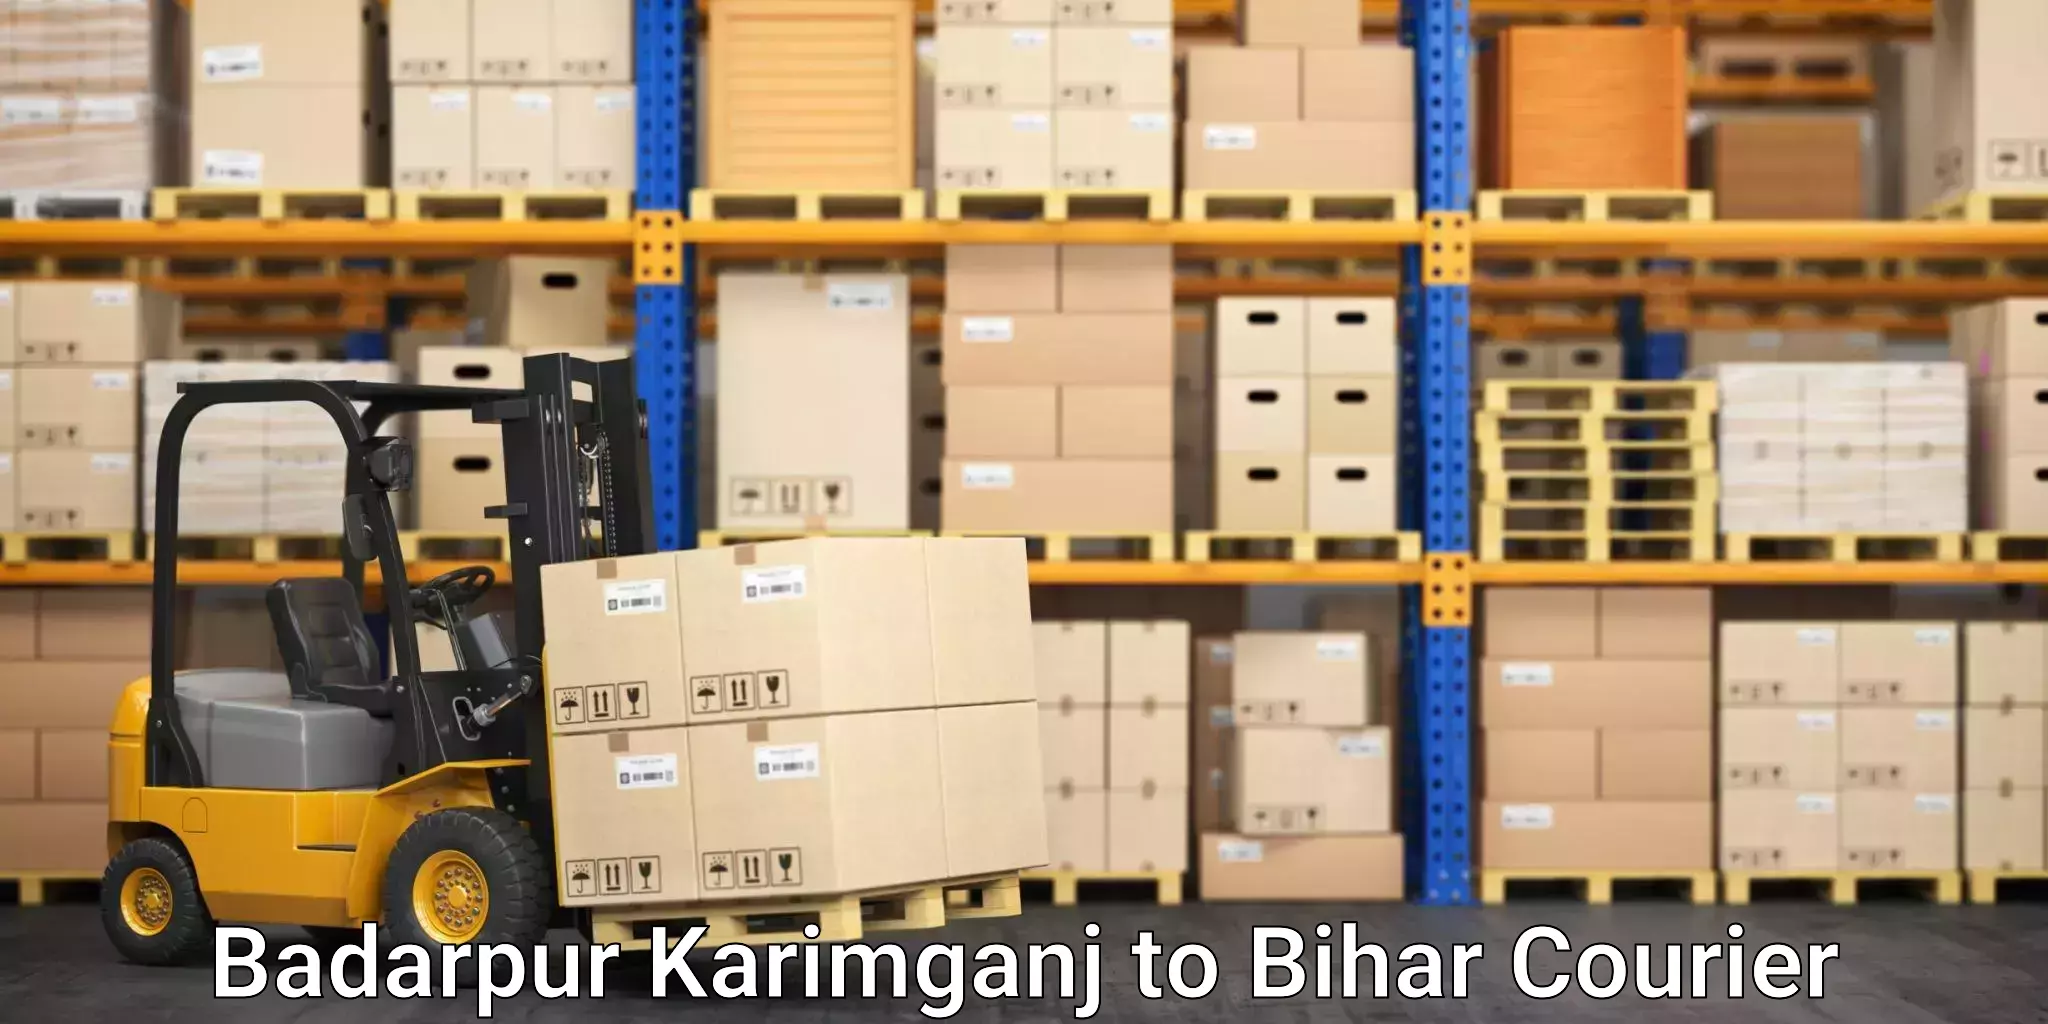 Same-day delivery options Badarpur Karimganj to Ghogha